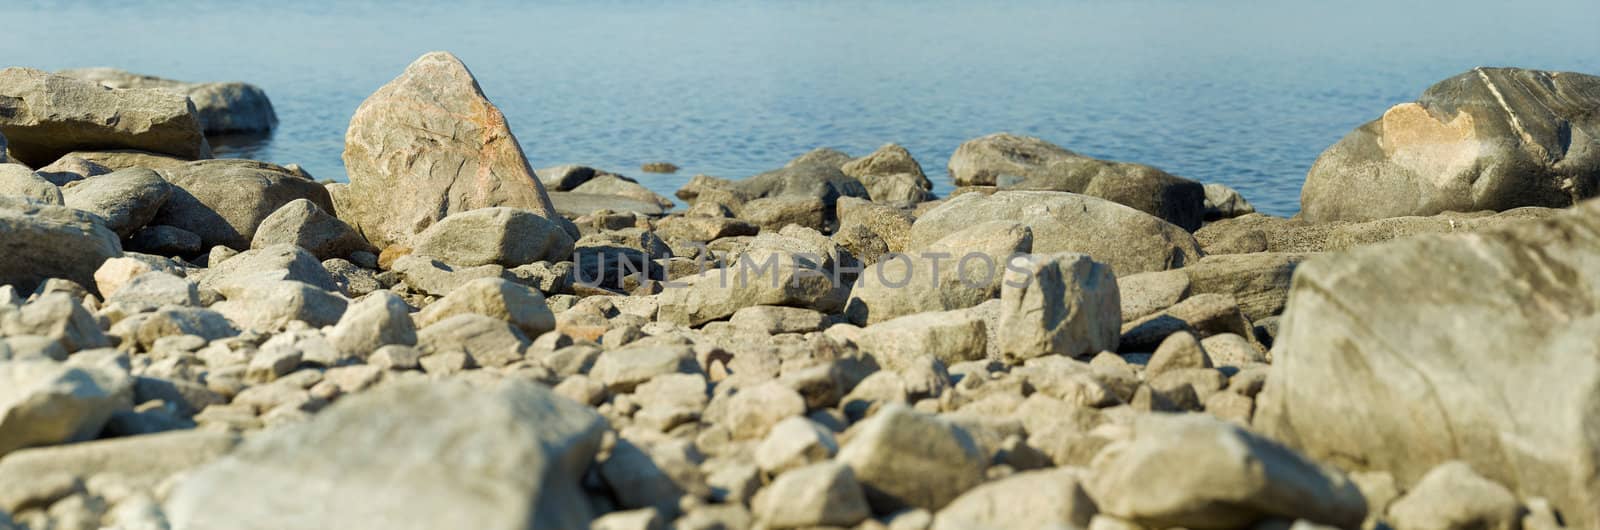 Landscape - stony coast of lake by pzaxe